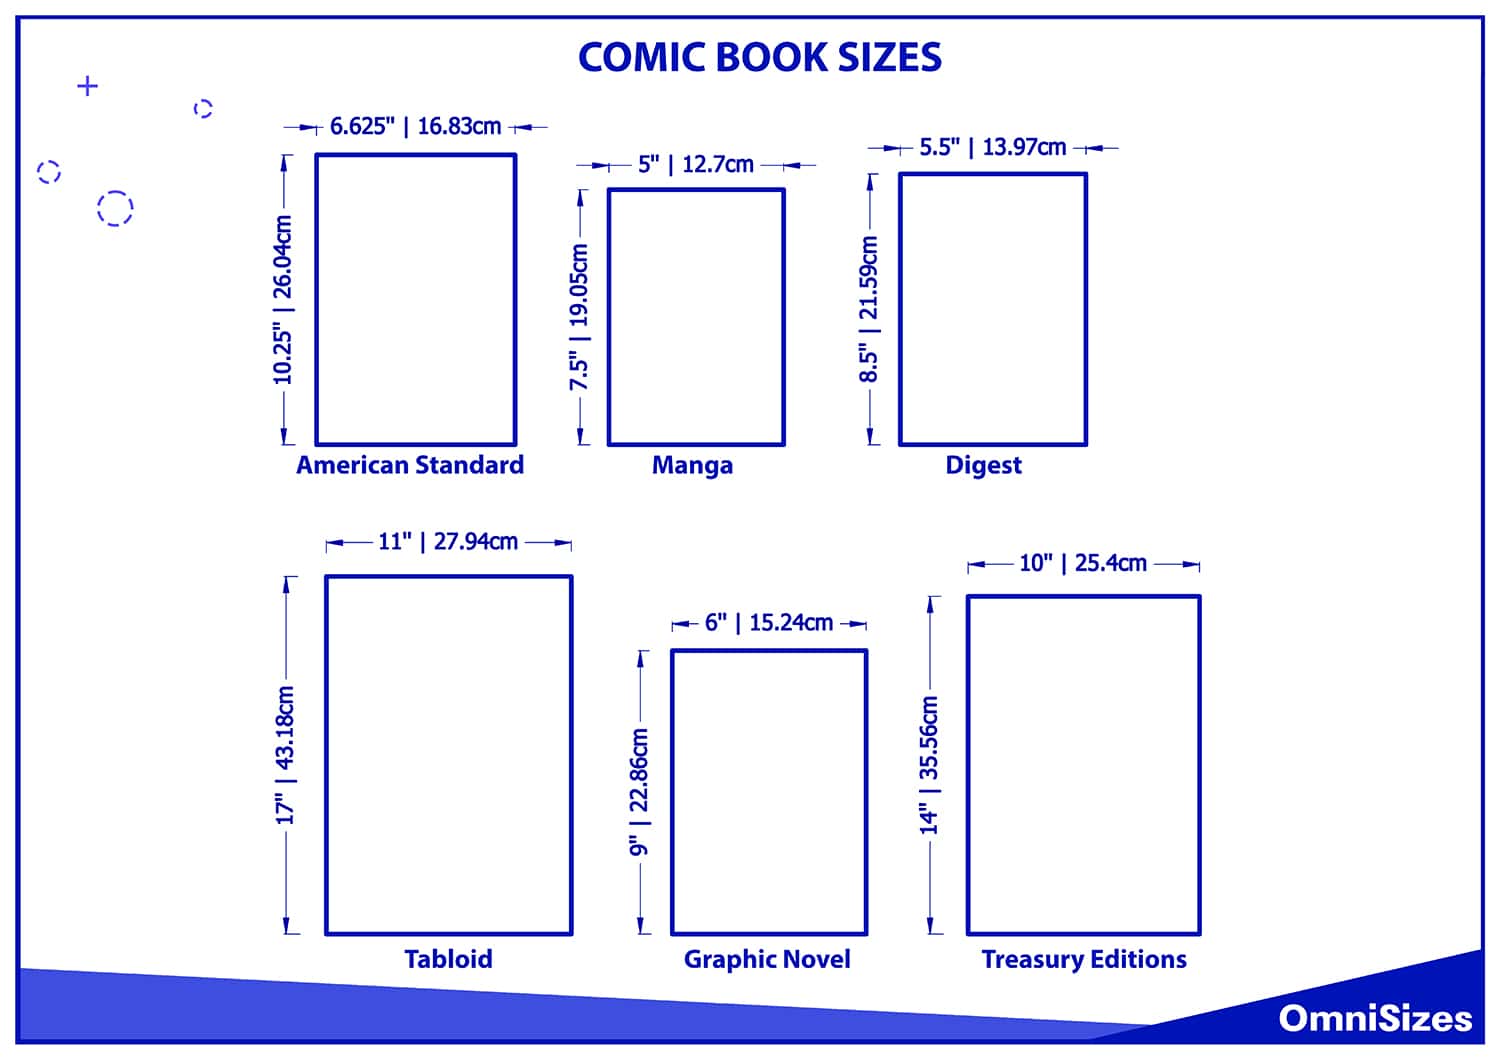 Comic book sizes